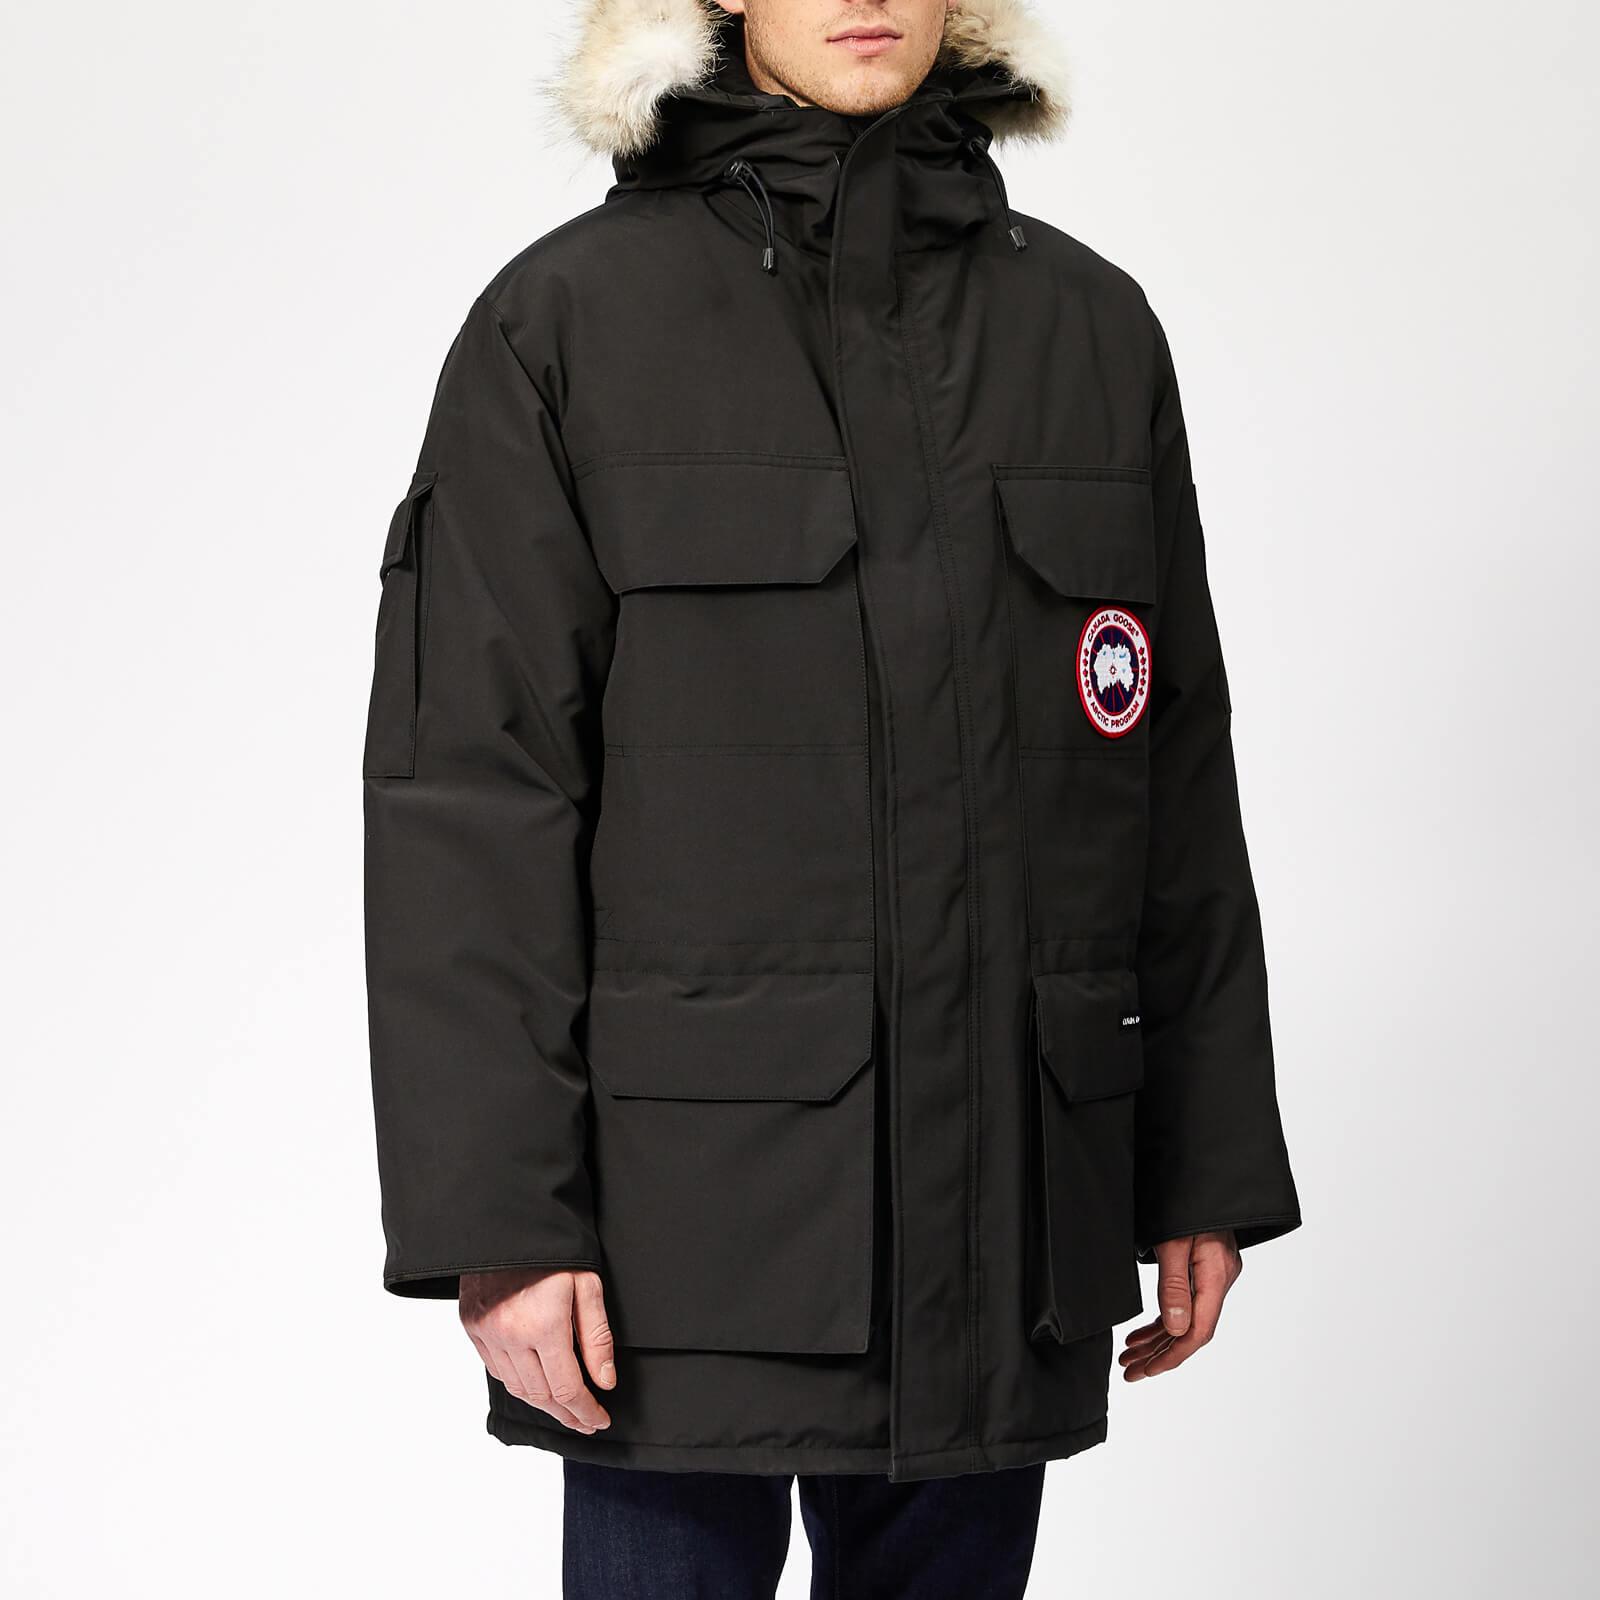 Canada Goose Goose Expedition Parka Jacket in Black for Men - Lyst